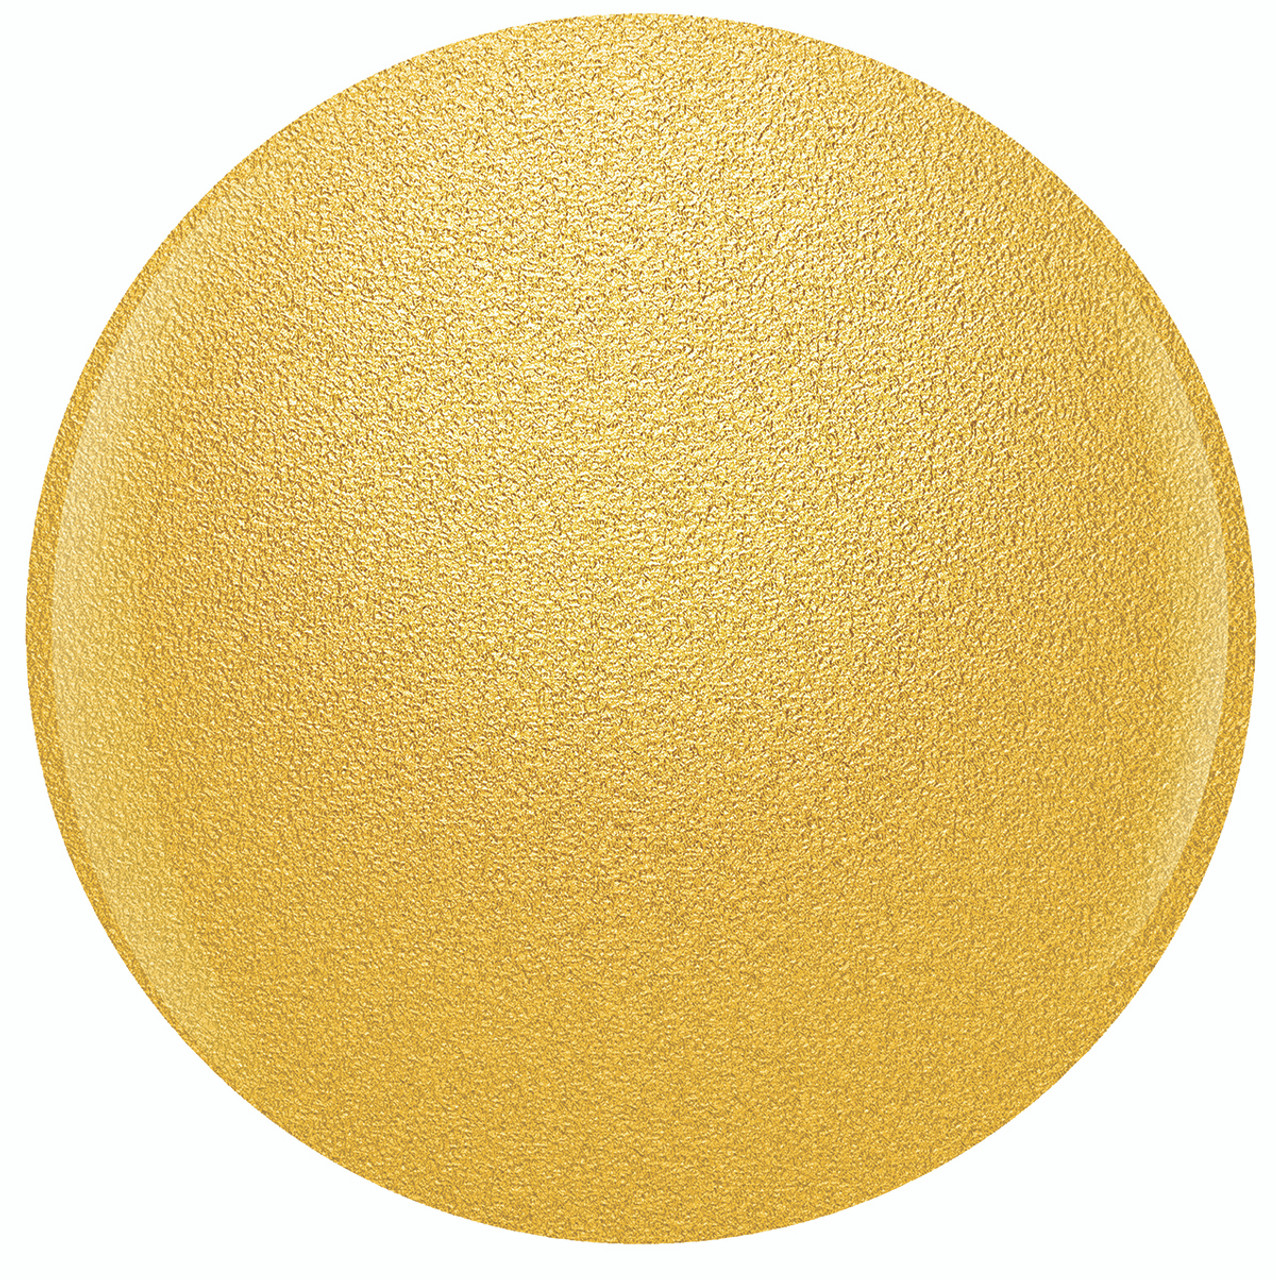 Gelish Art Form Effects Gold Shimmer - 5g